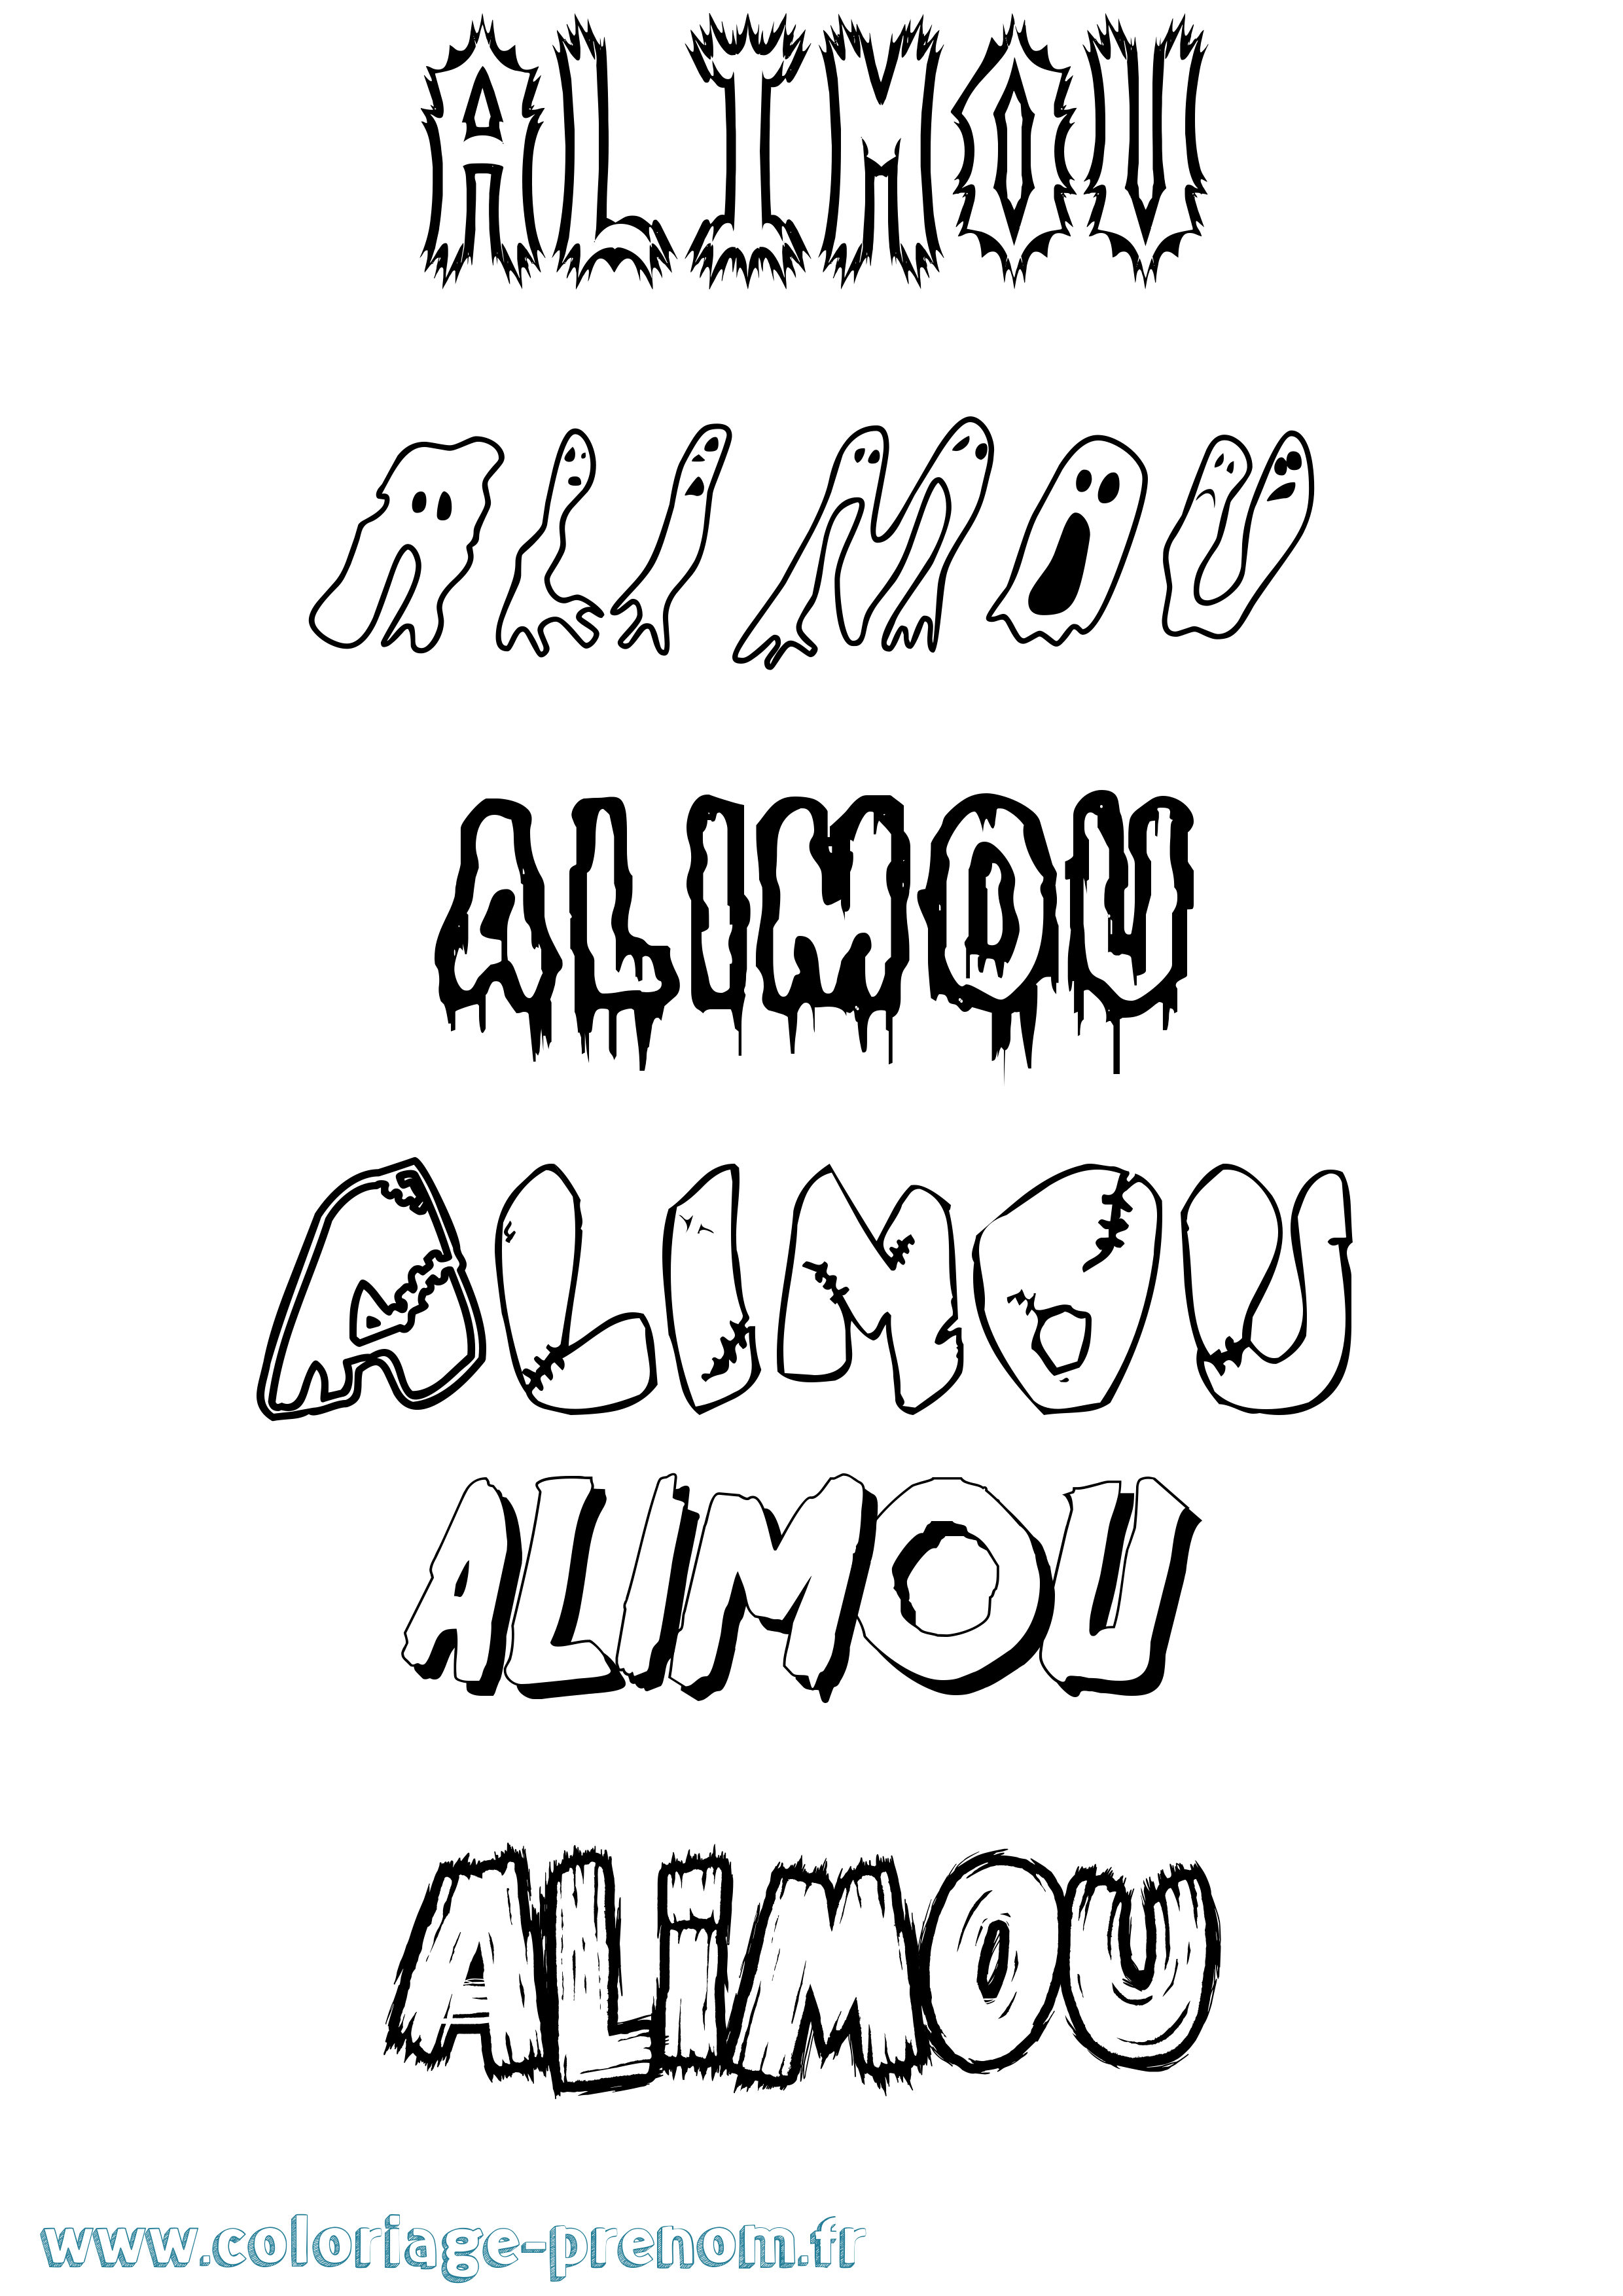 Coloriage prénom Alimou Frisson